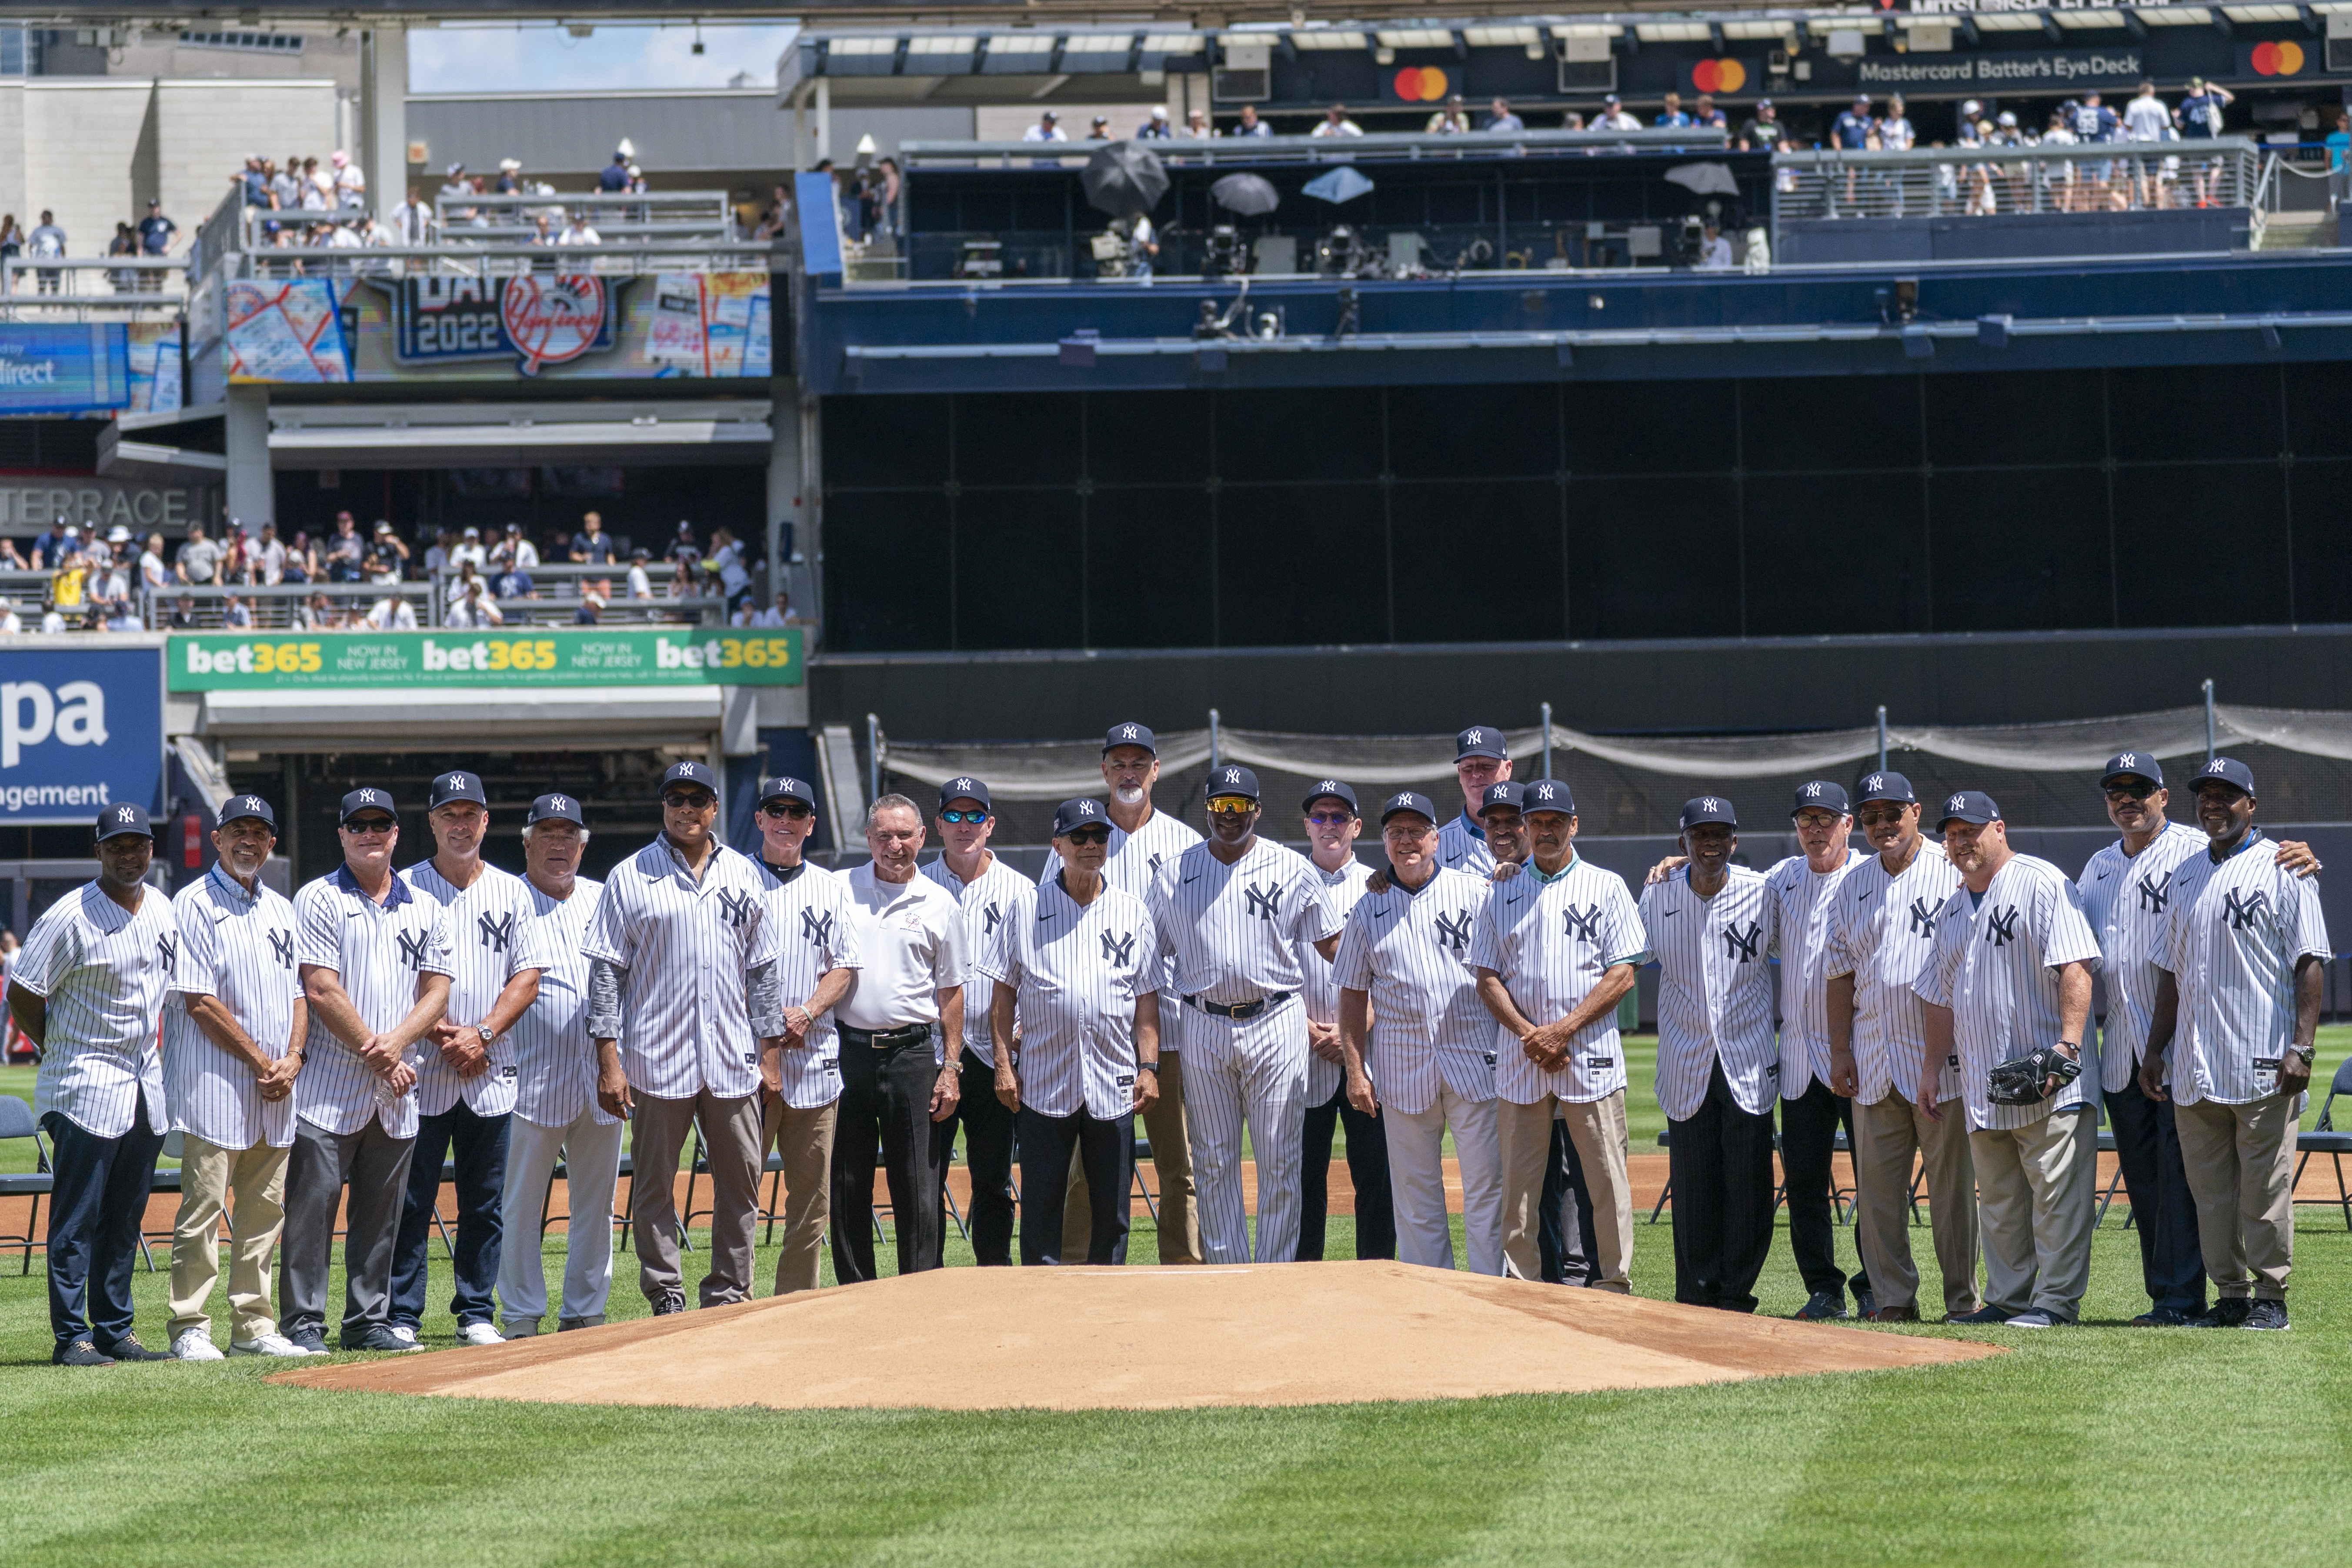 Yankees Opening Day 2022: Fans return to Yankee Stadium